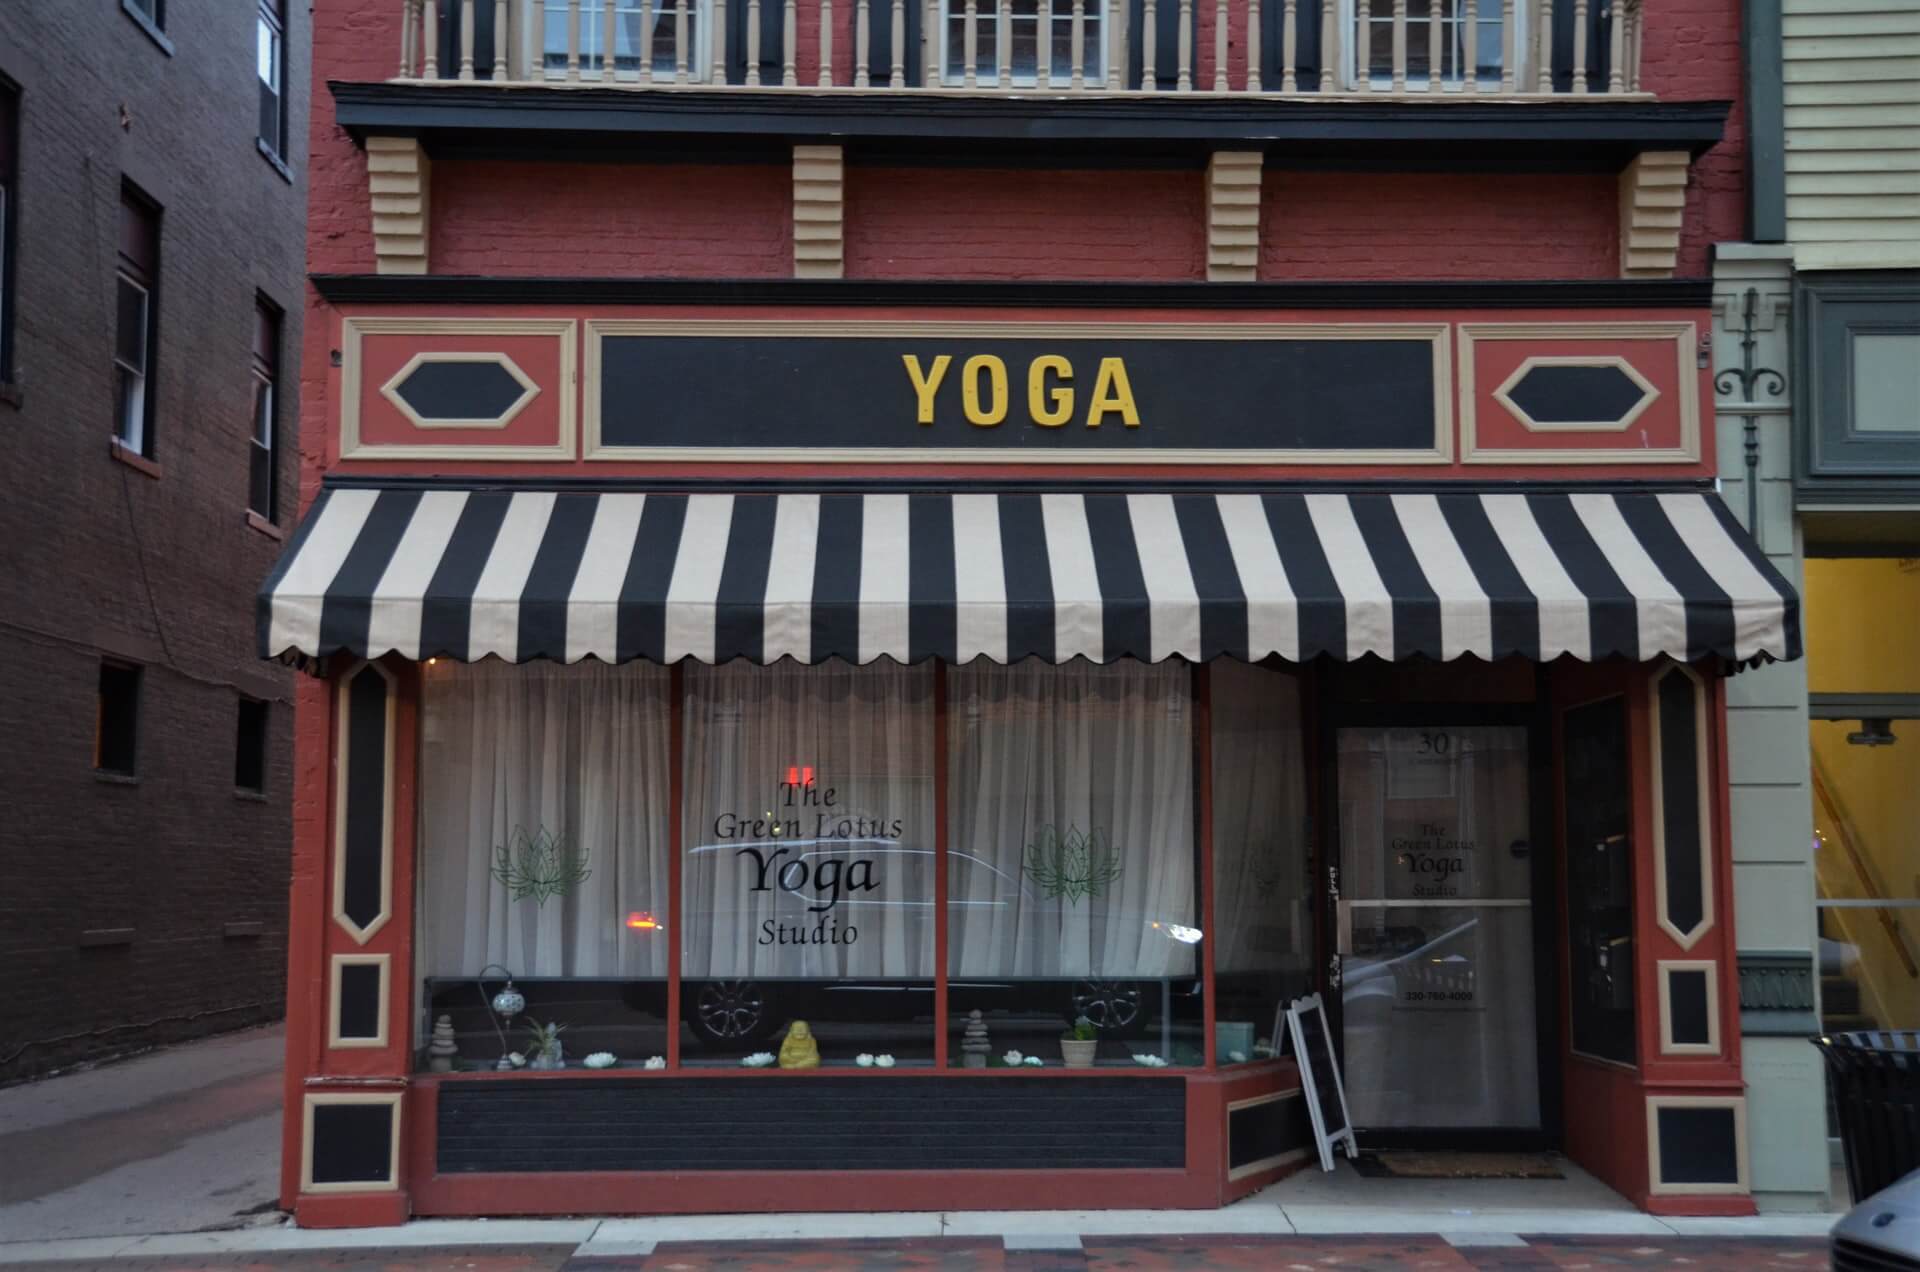 Yoga studio awnings